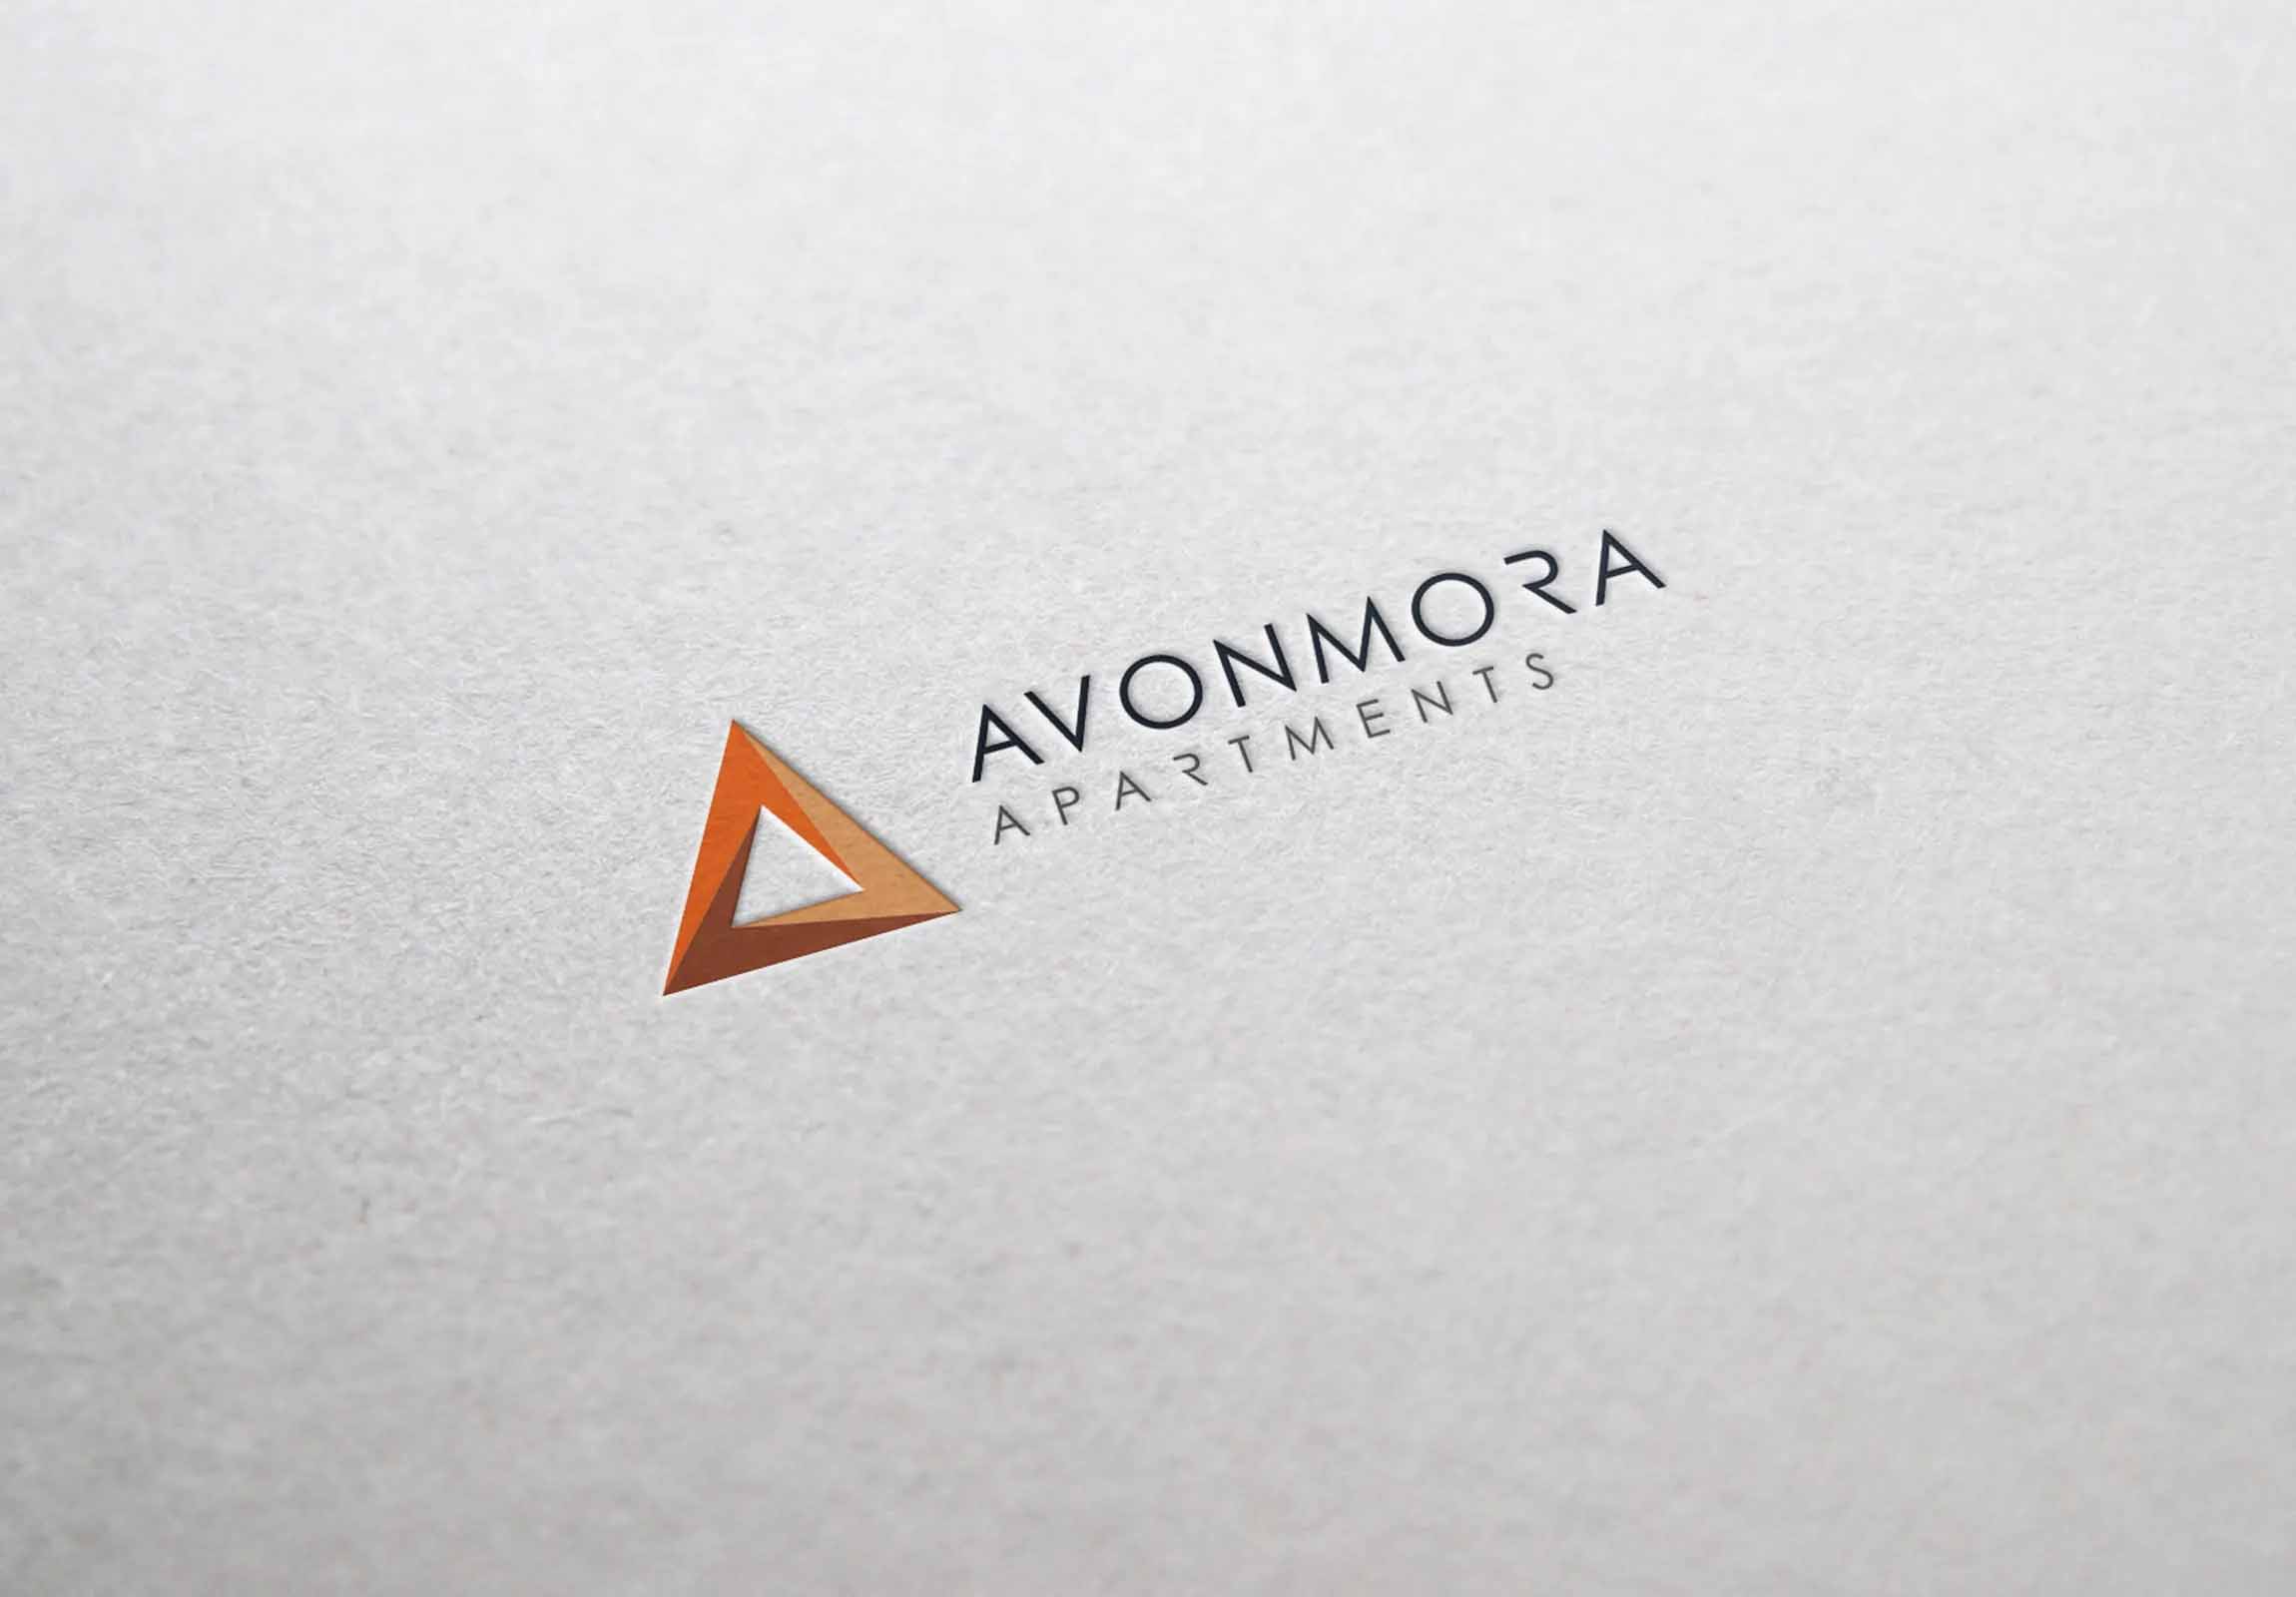 Avonmora – BEVIN CREATIVE